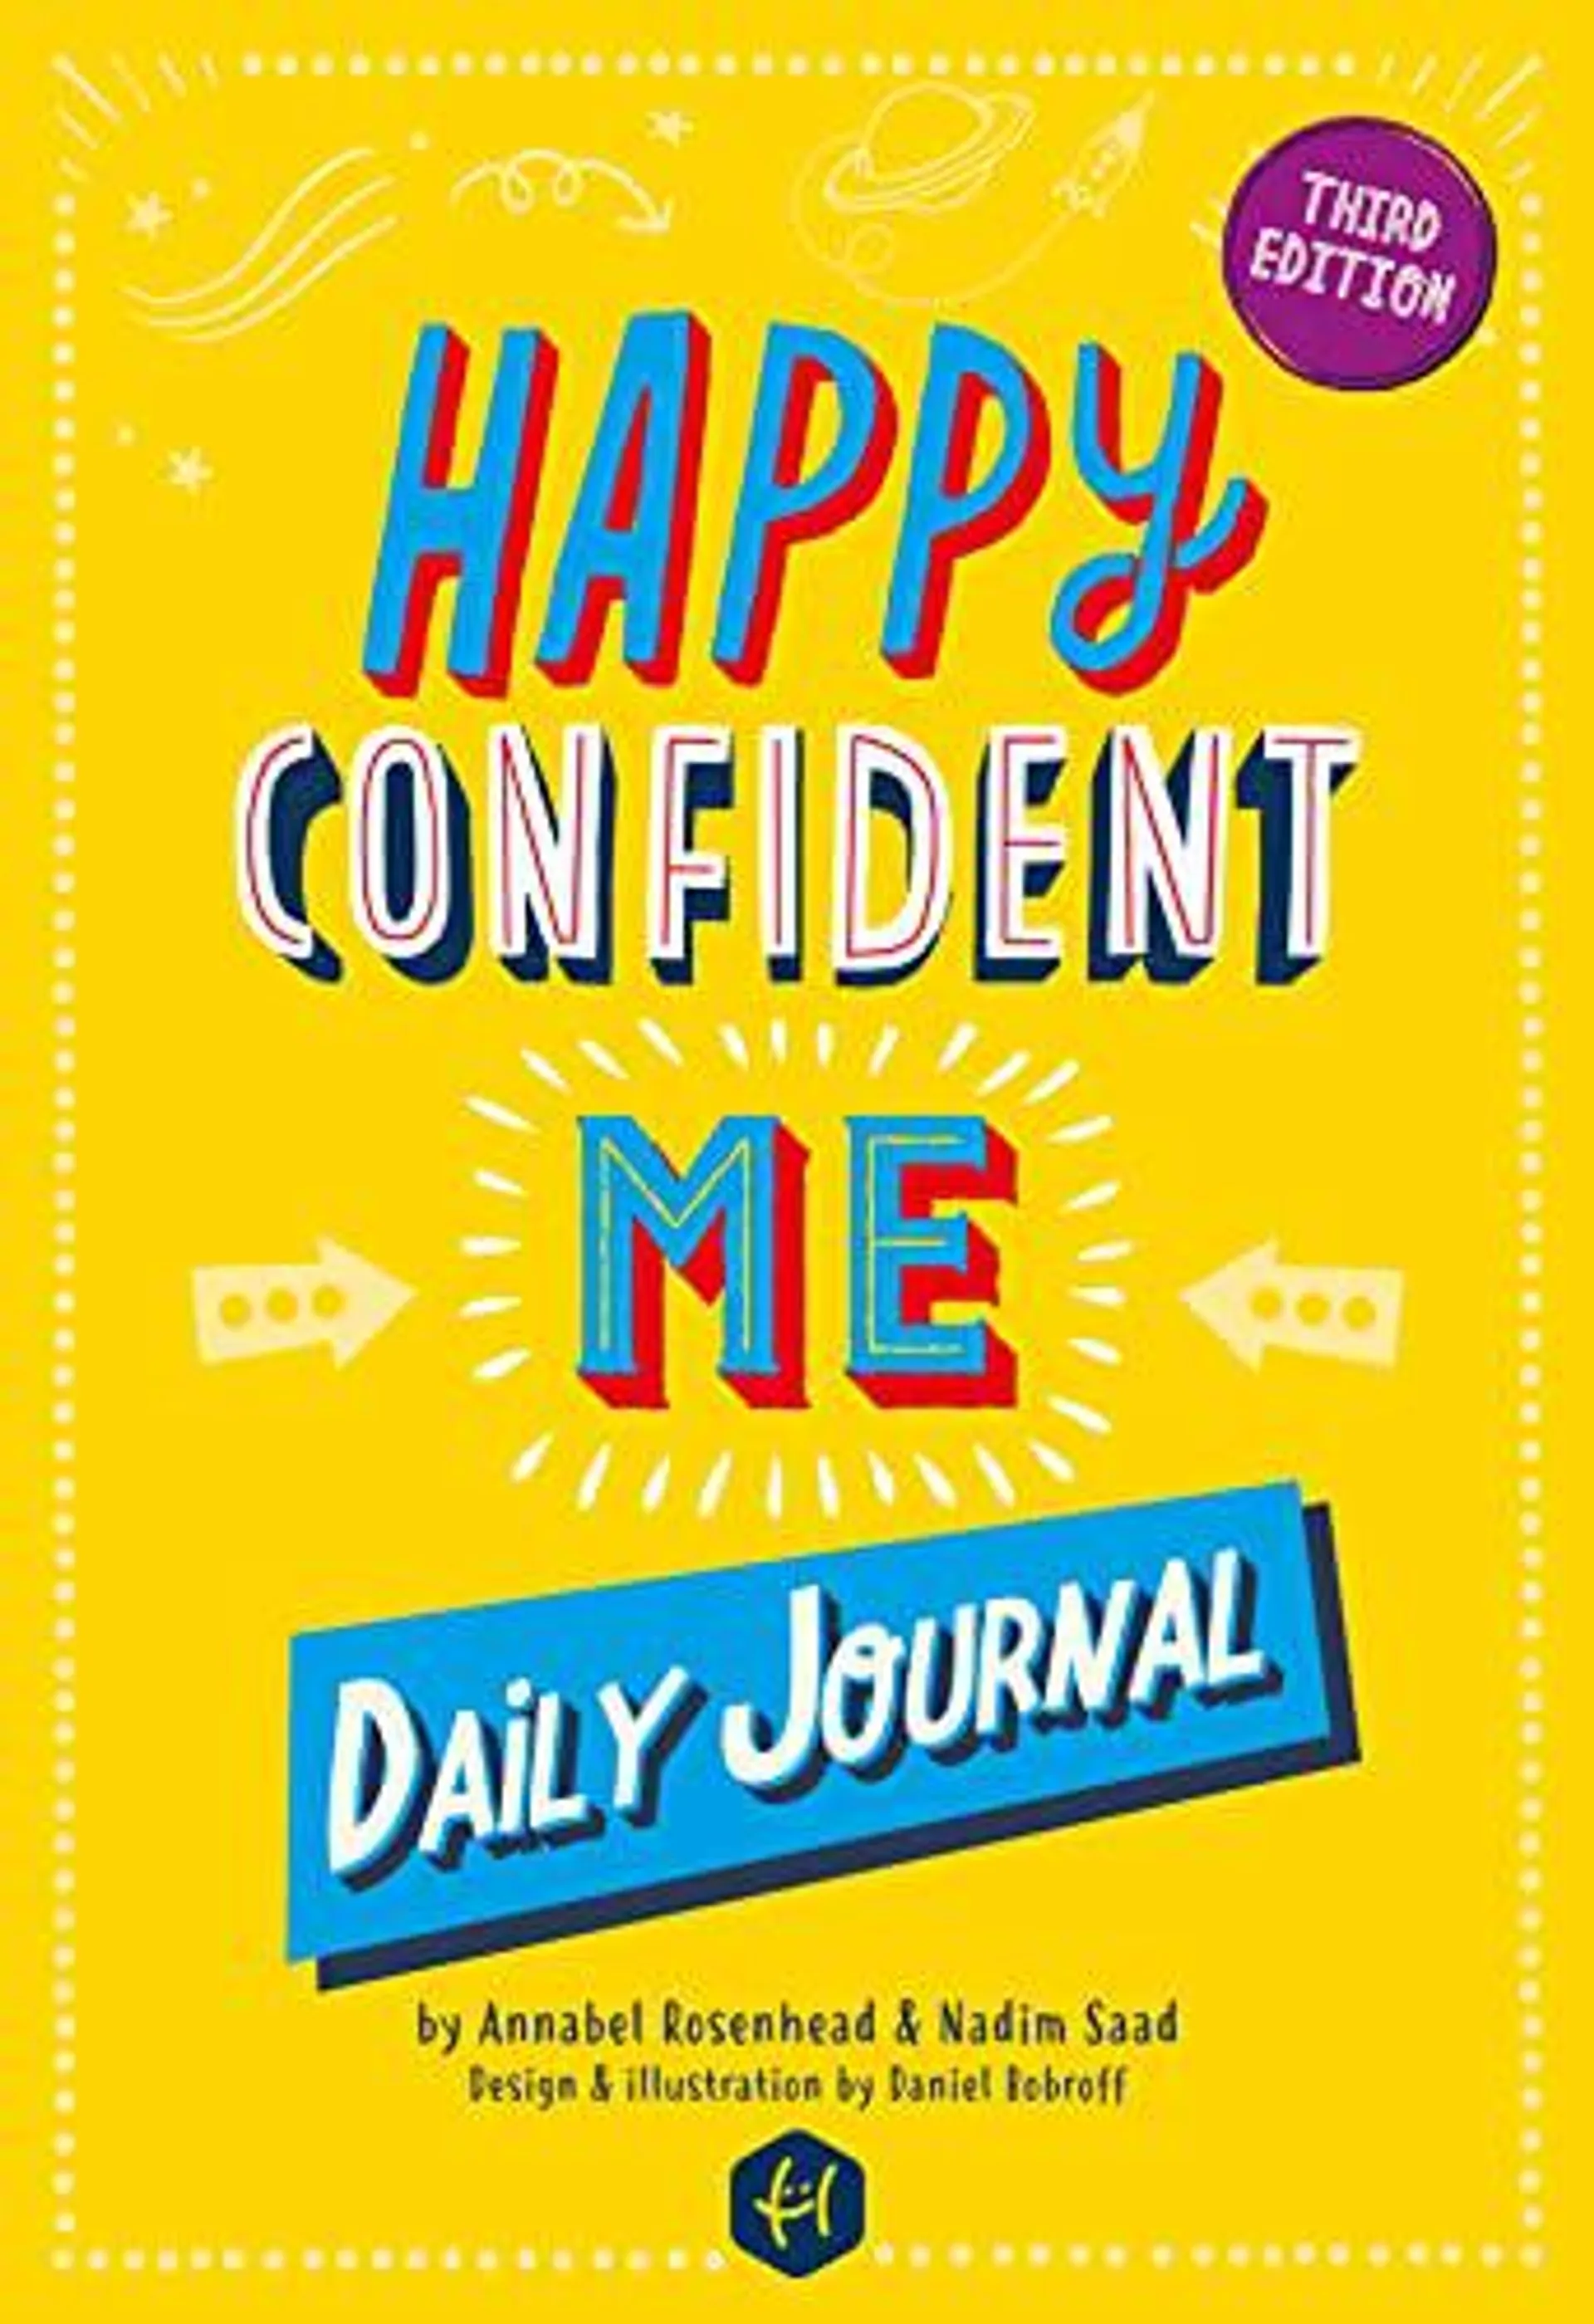 Happy Confident Me Journal by Nadim Saad